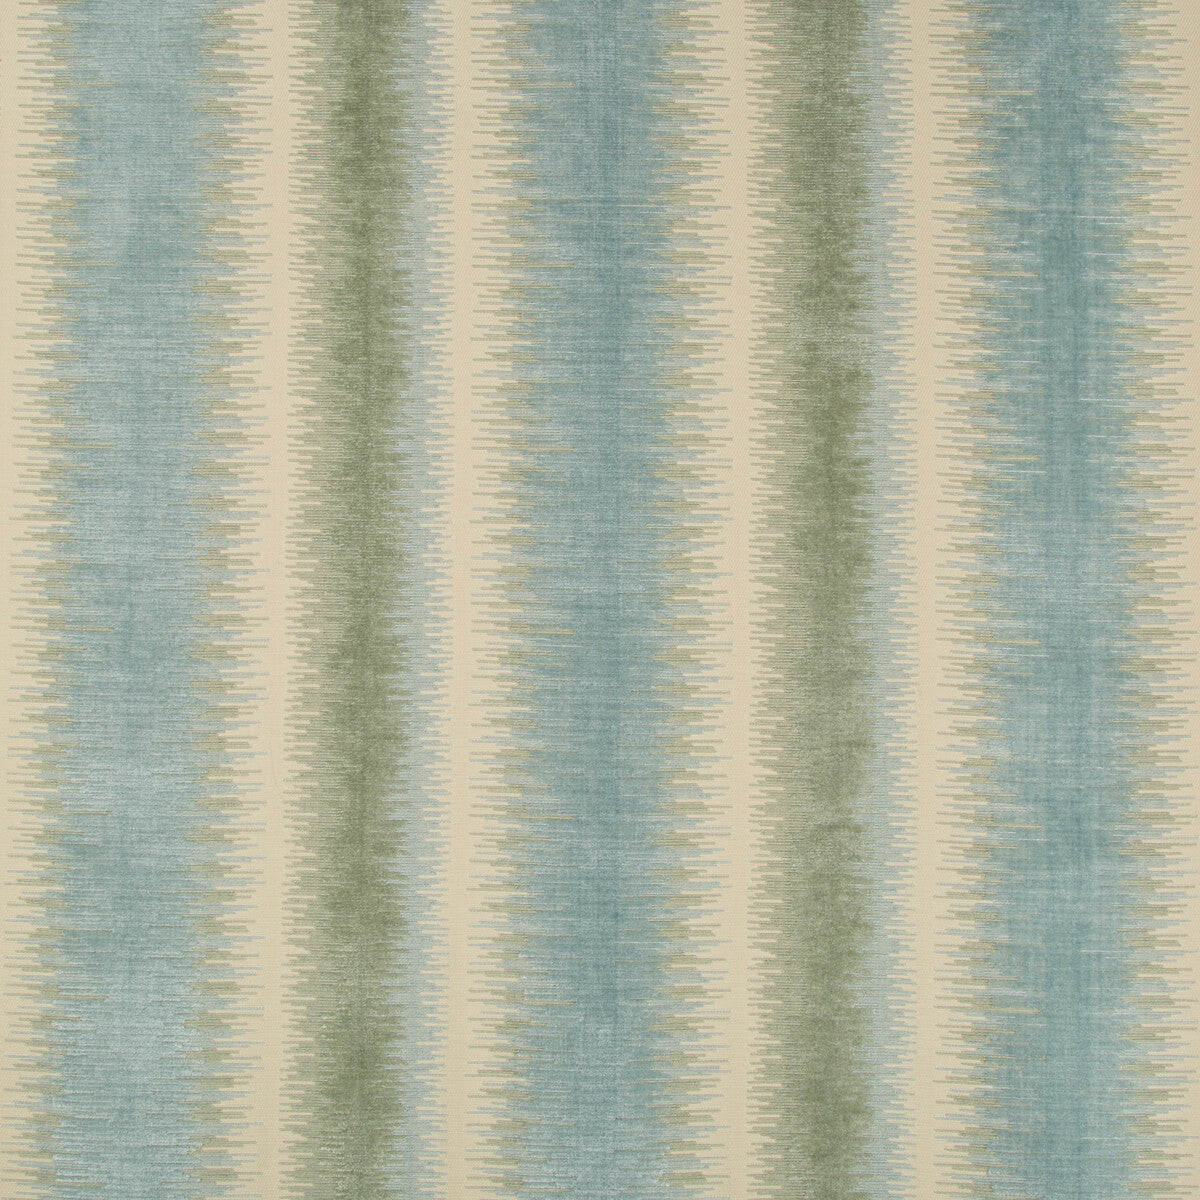 Bromo Velvet fabric in seafoam color - pattern 8018115.13.0 - by Brunschwig &amp; Fils in the Baret collection